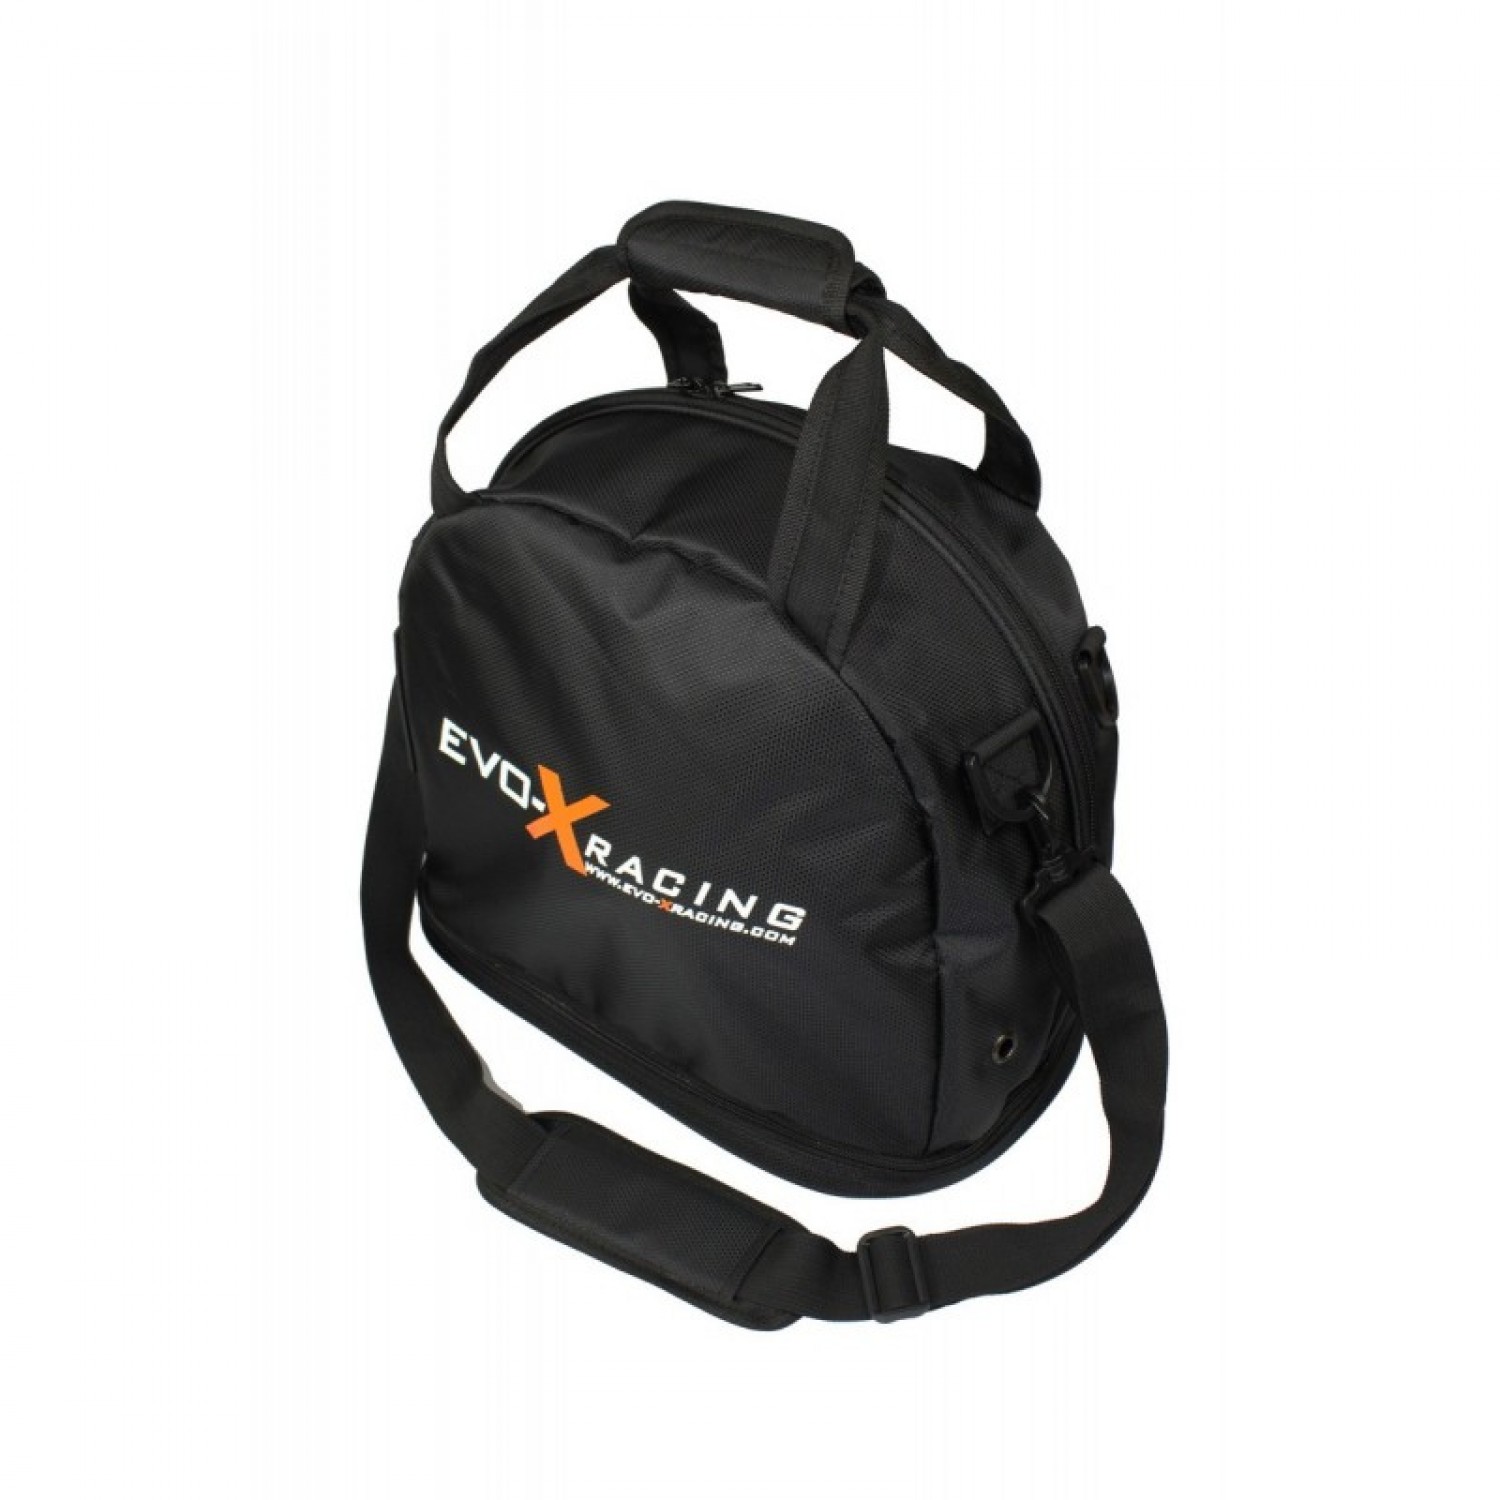 Pack Promo Evo X Racing housse combinaison + sac à jantes+sac à casque